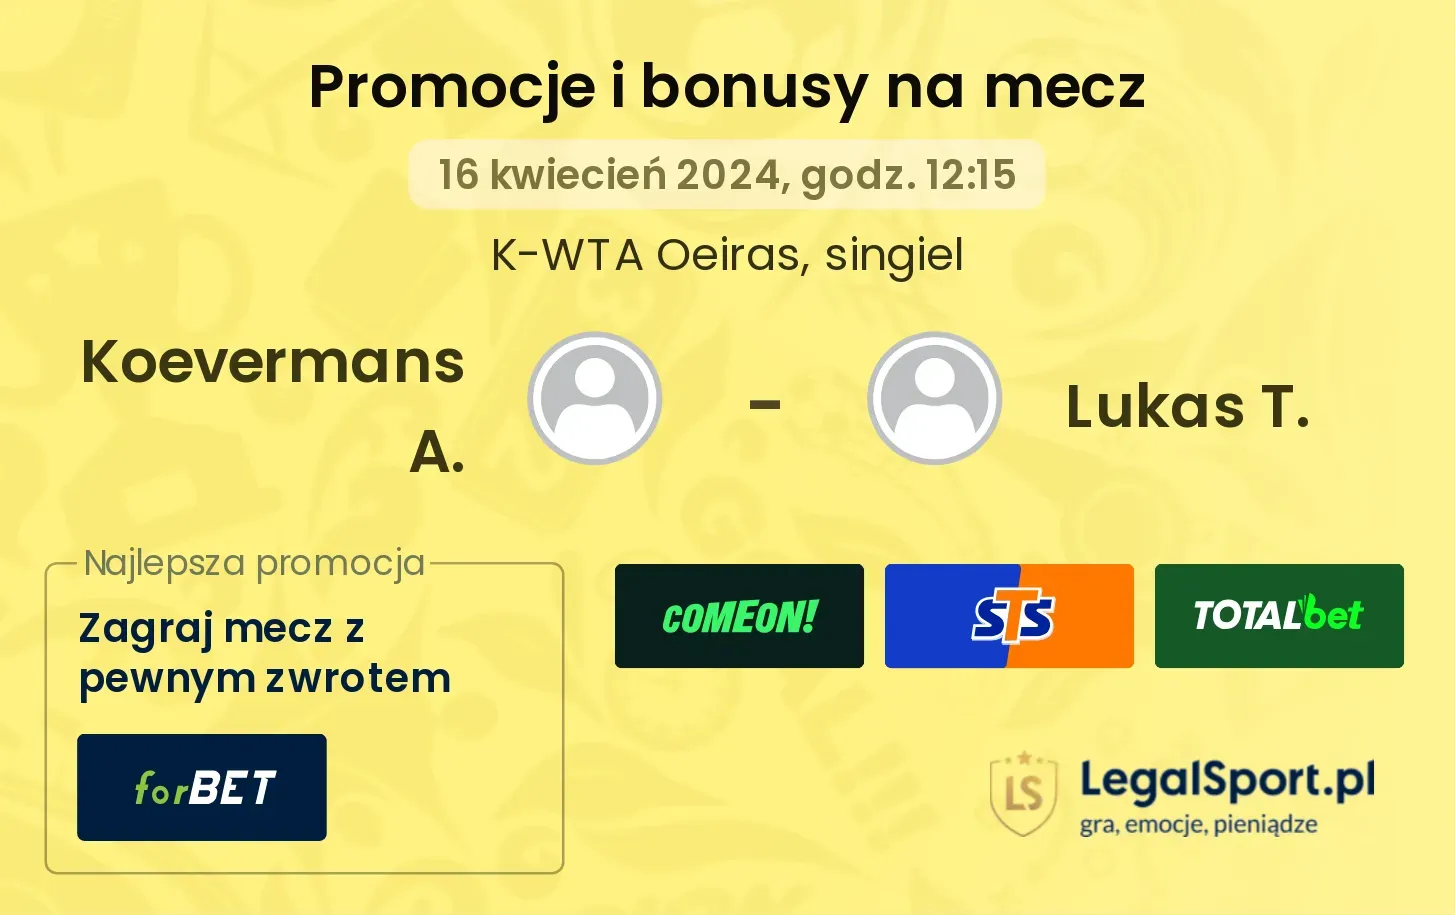 Koevermans A. - Lukas T. promocje bonusy na mecz